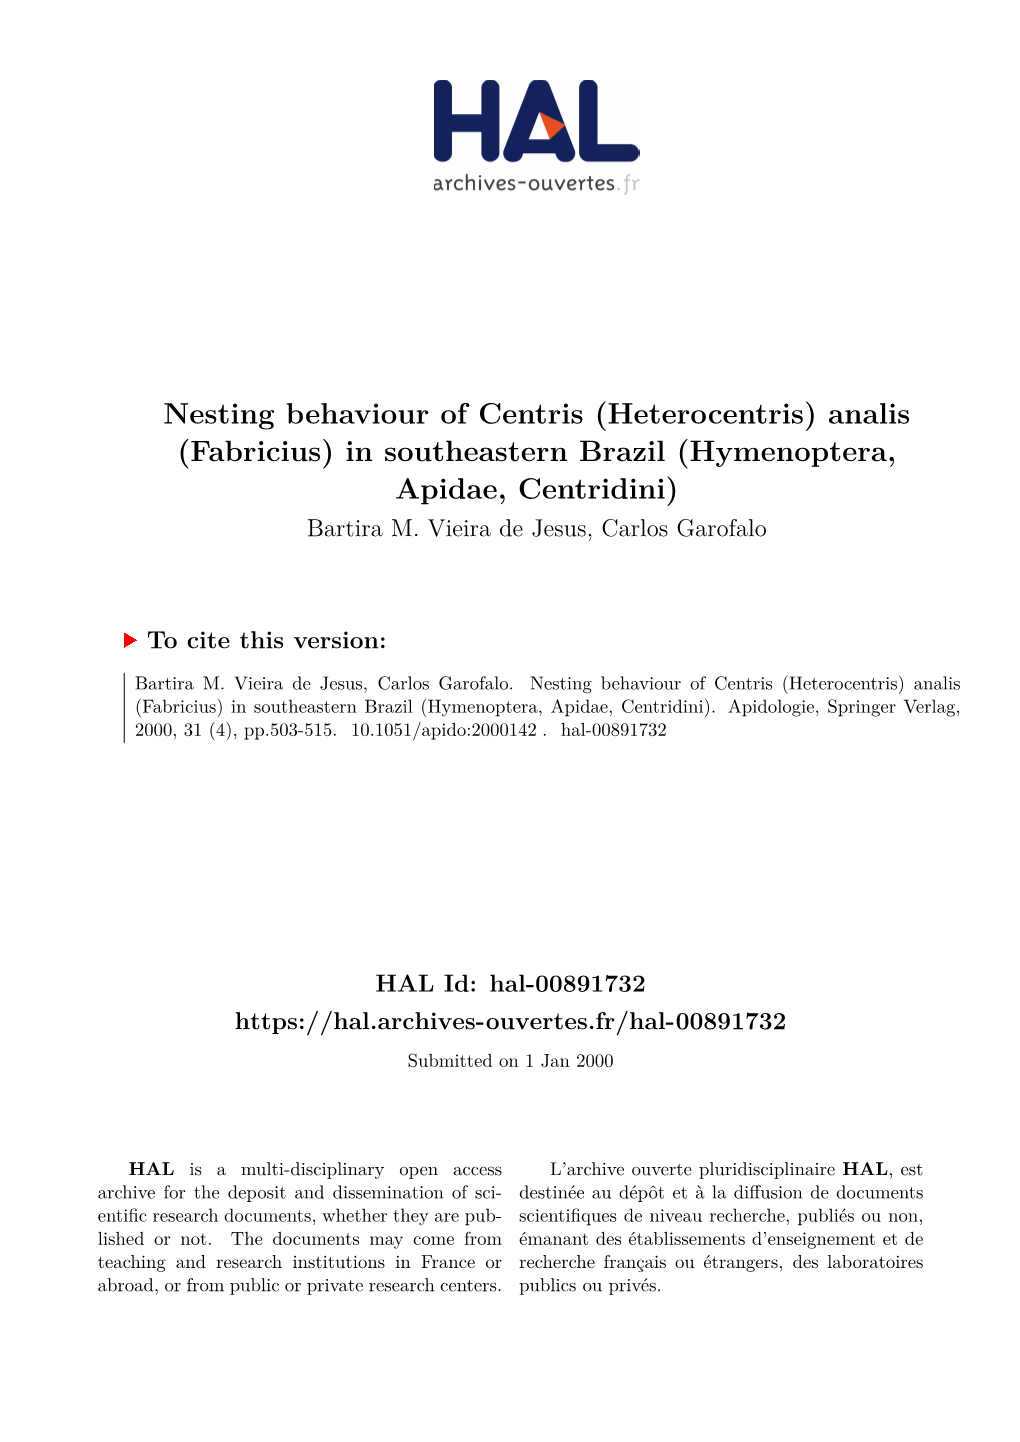 Nesting Behaviour of Centris (Heterocentris) Analis (Fabricius) in Southeastern Brazil (Hymenoptera, Apidae, Centridini) Bartira M